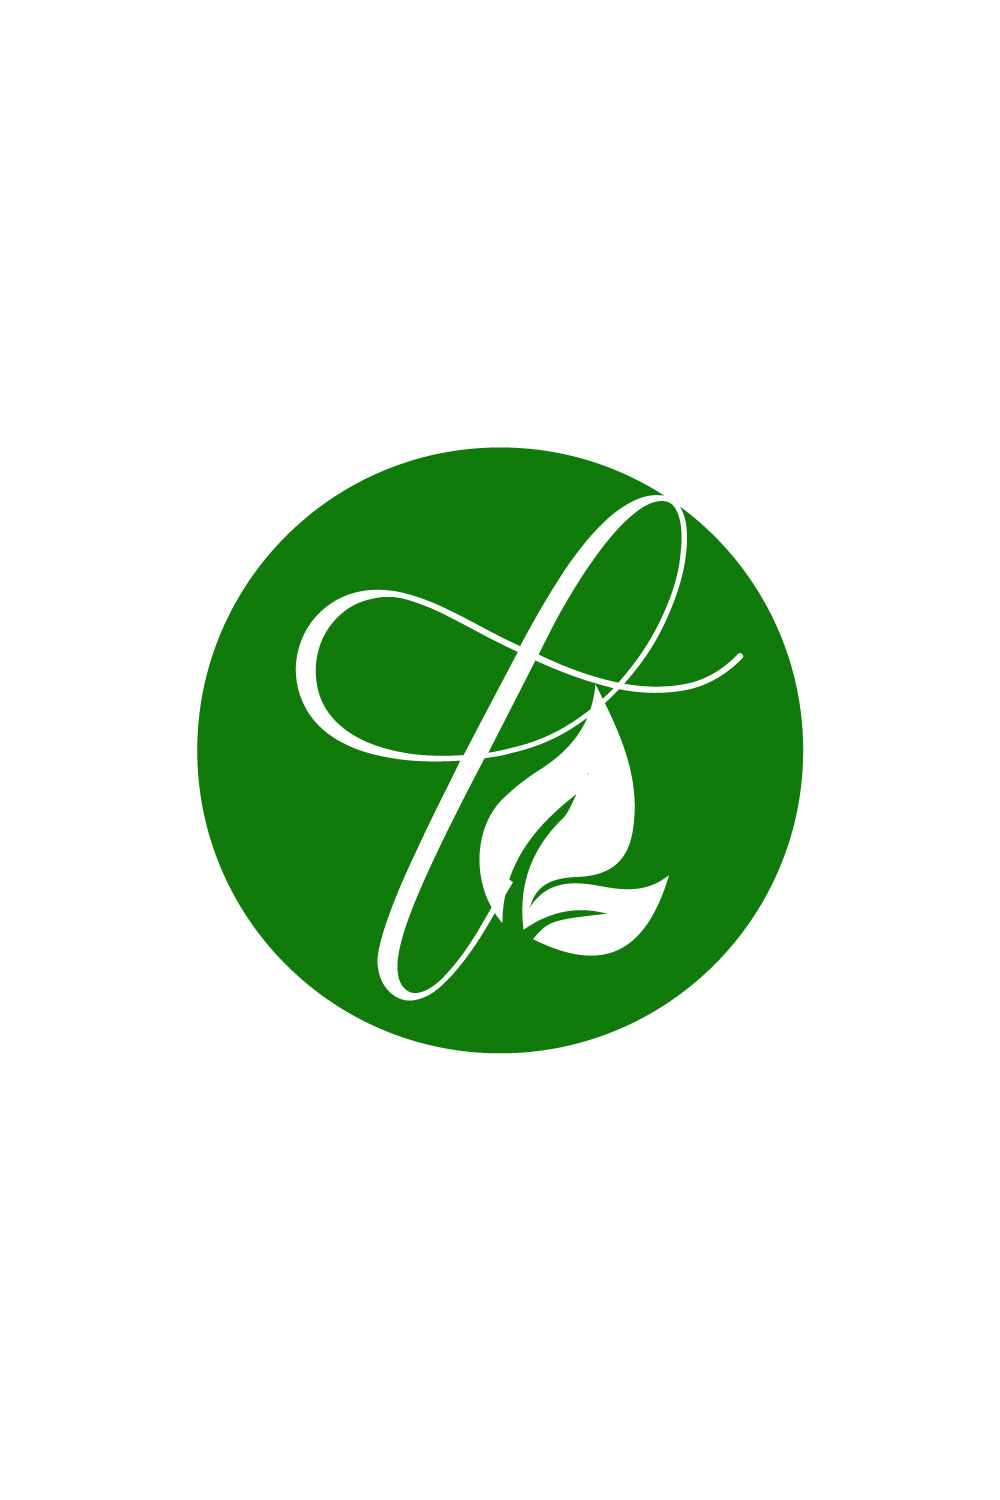 Free botanical logo pinterest preview image.